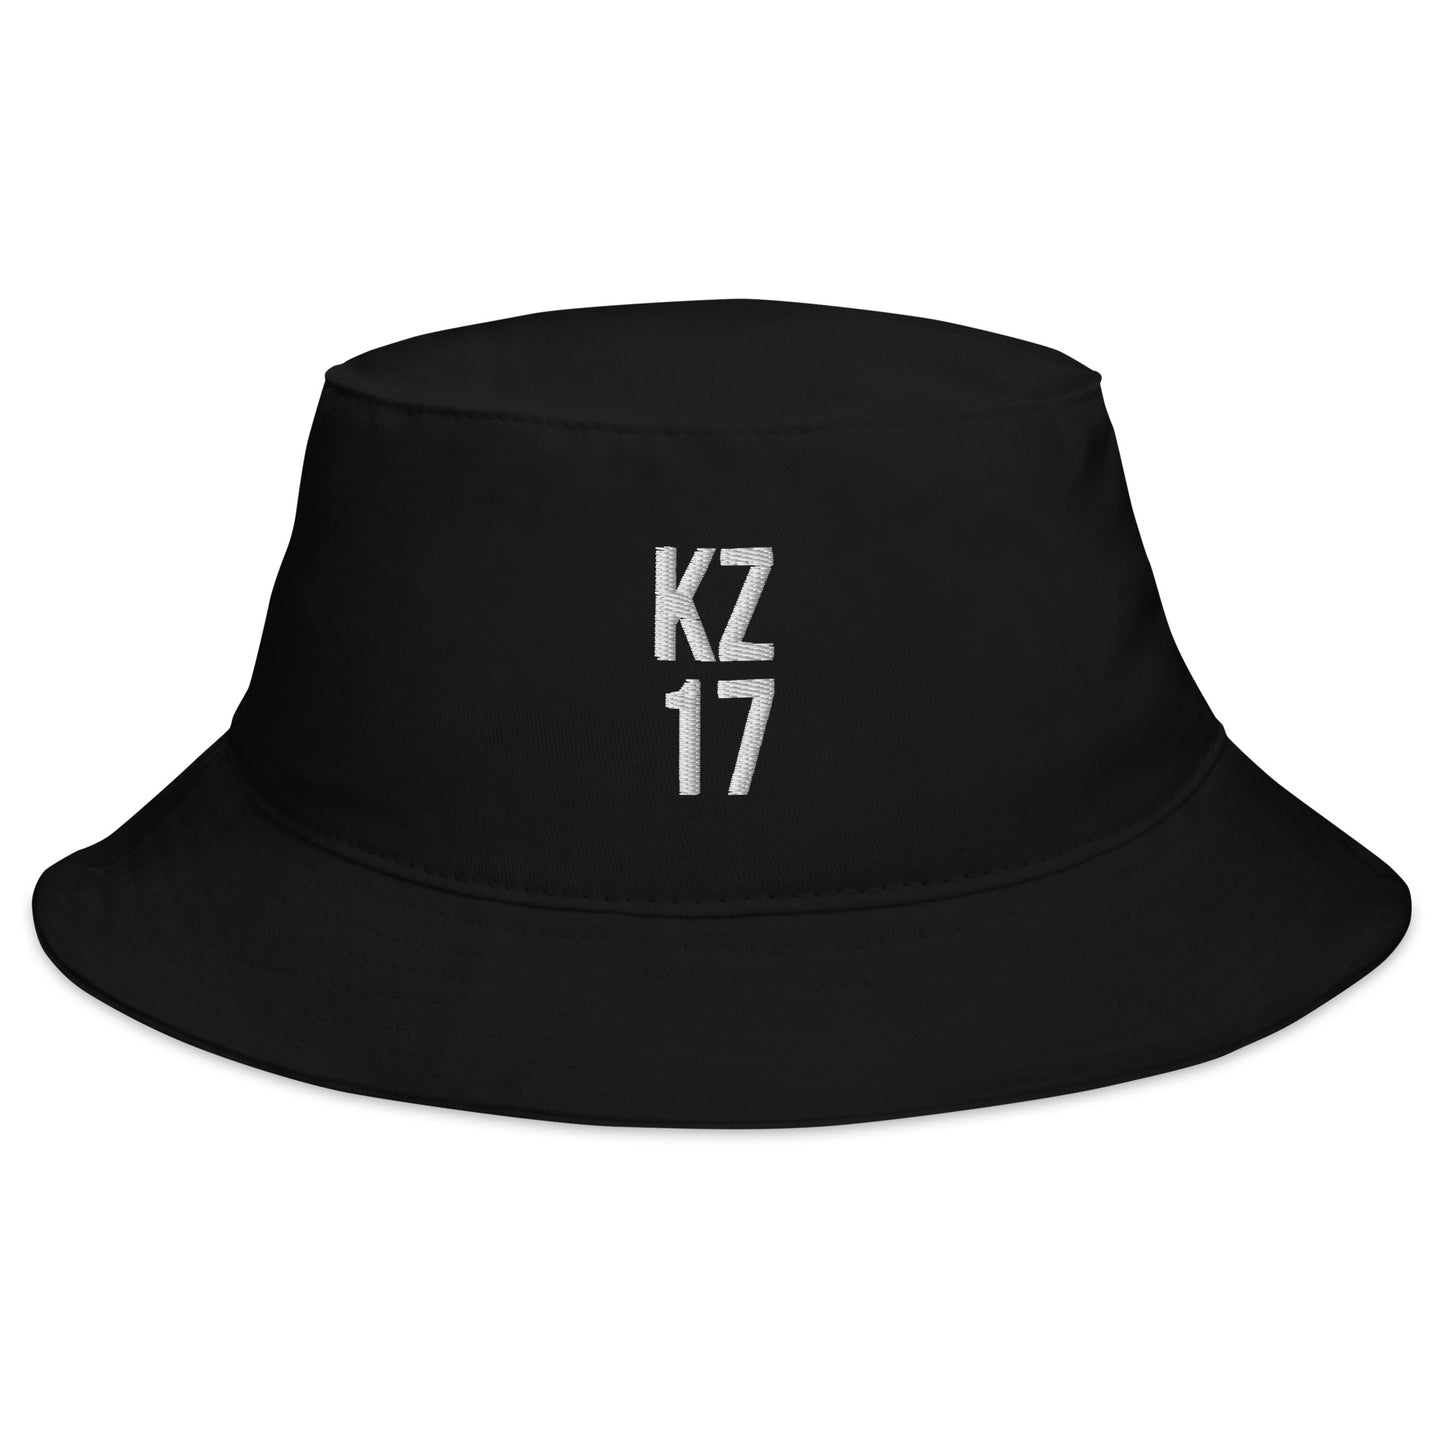 KZ 17 Bucket Hat